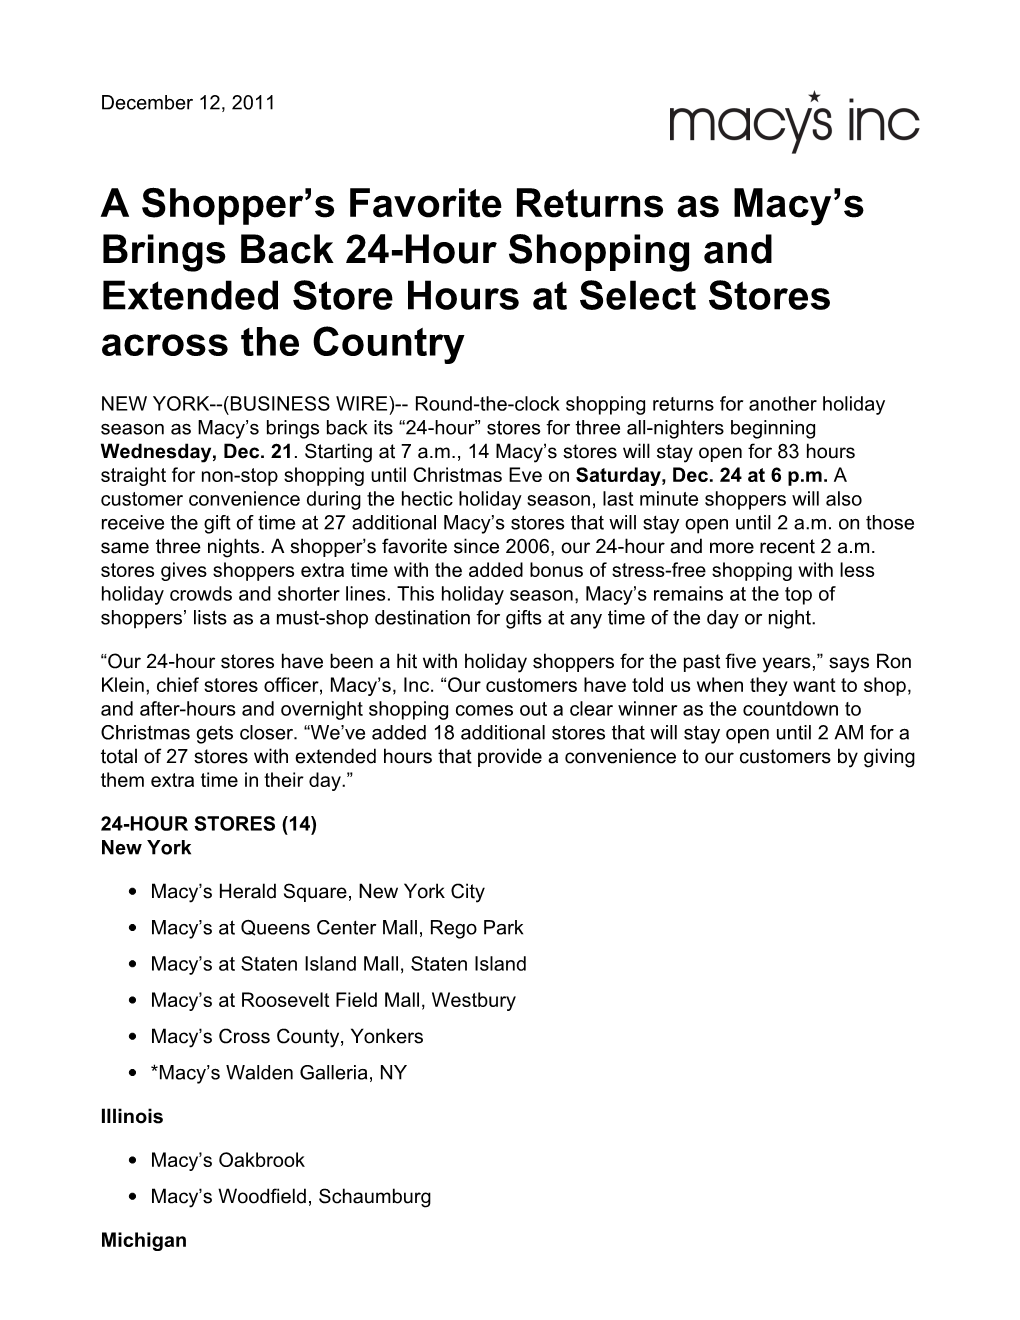 A Shopper's Favorite Returns As Macy's Brings Back 24-Hour